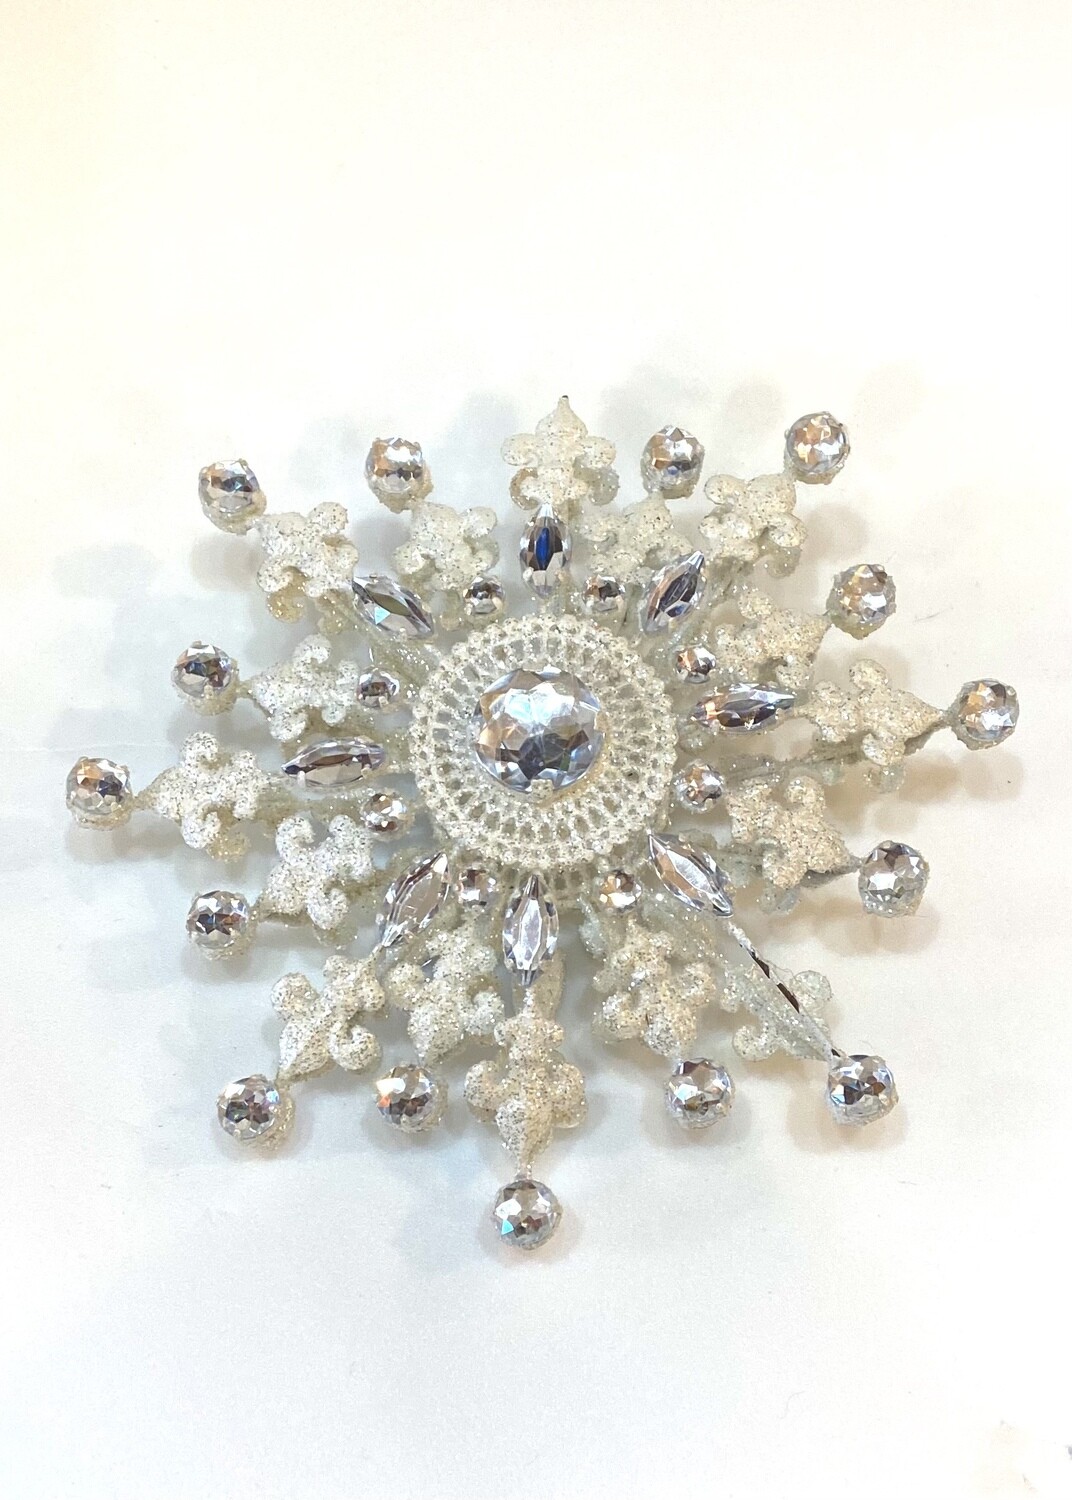 Large Glitter and Rhinestone Snowflake Ornament 9”